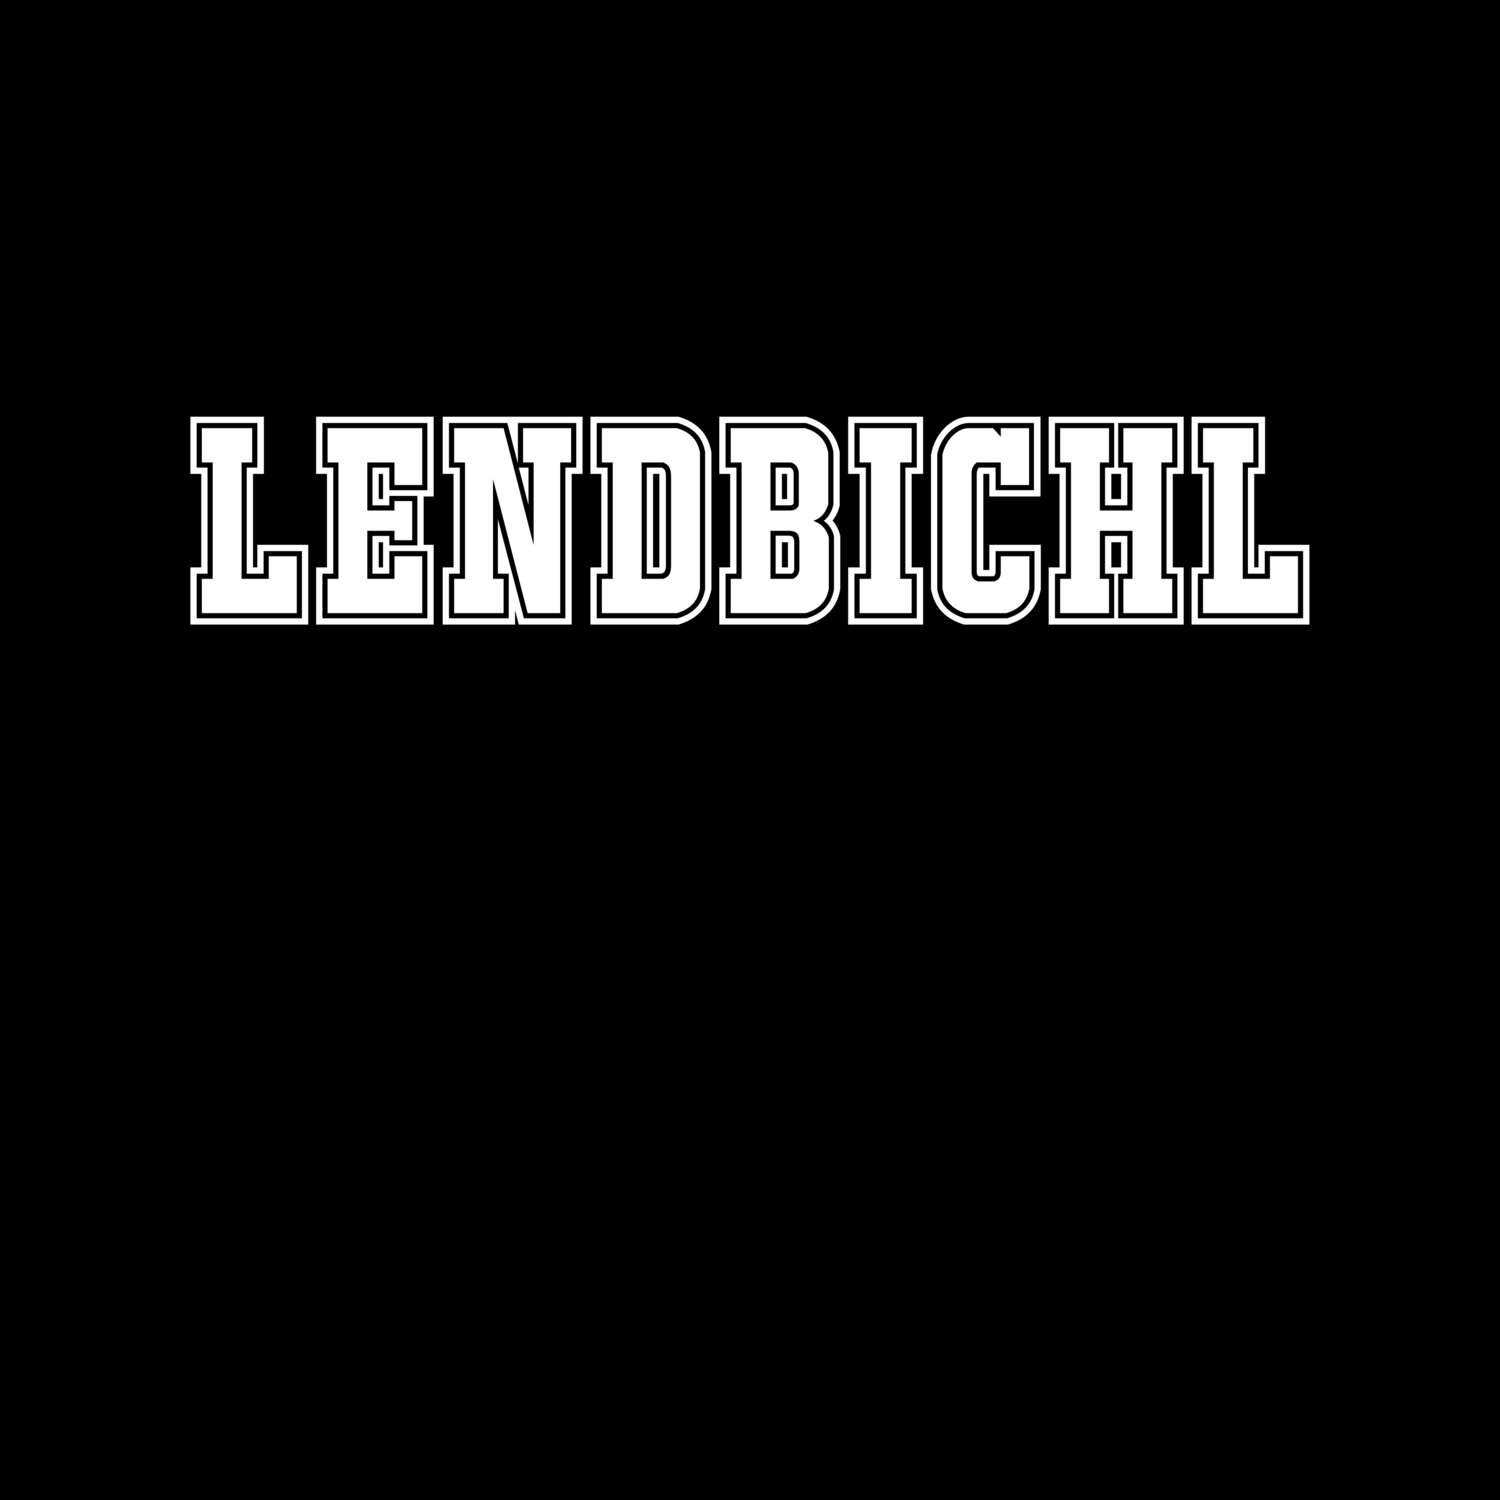 Lendbichl T-Shirt »Classic«